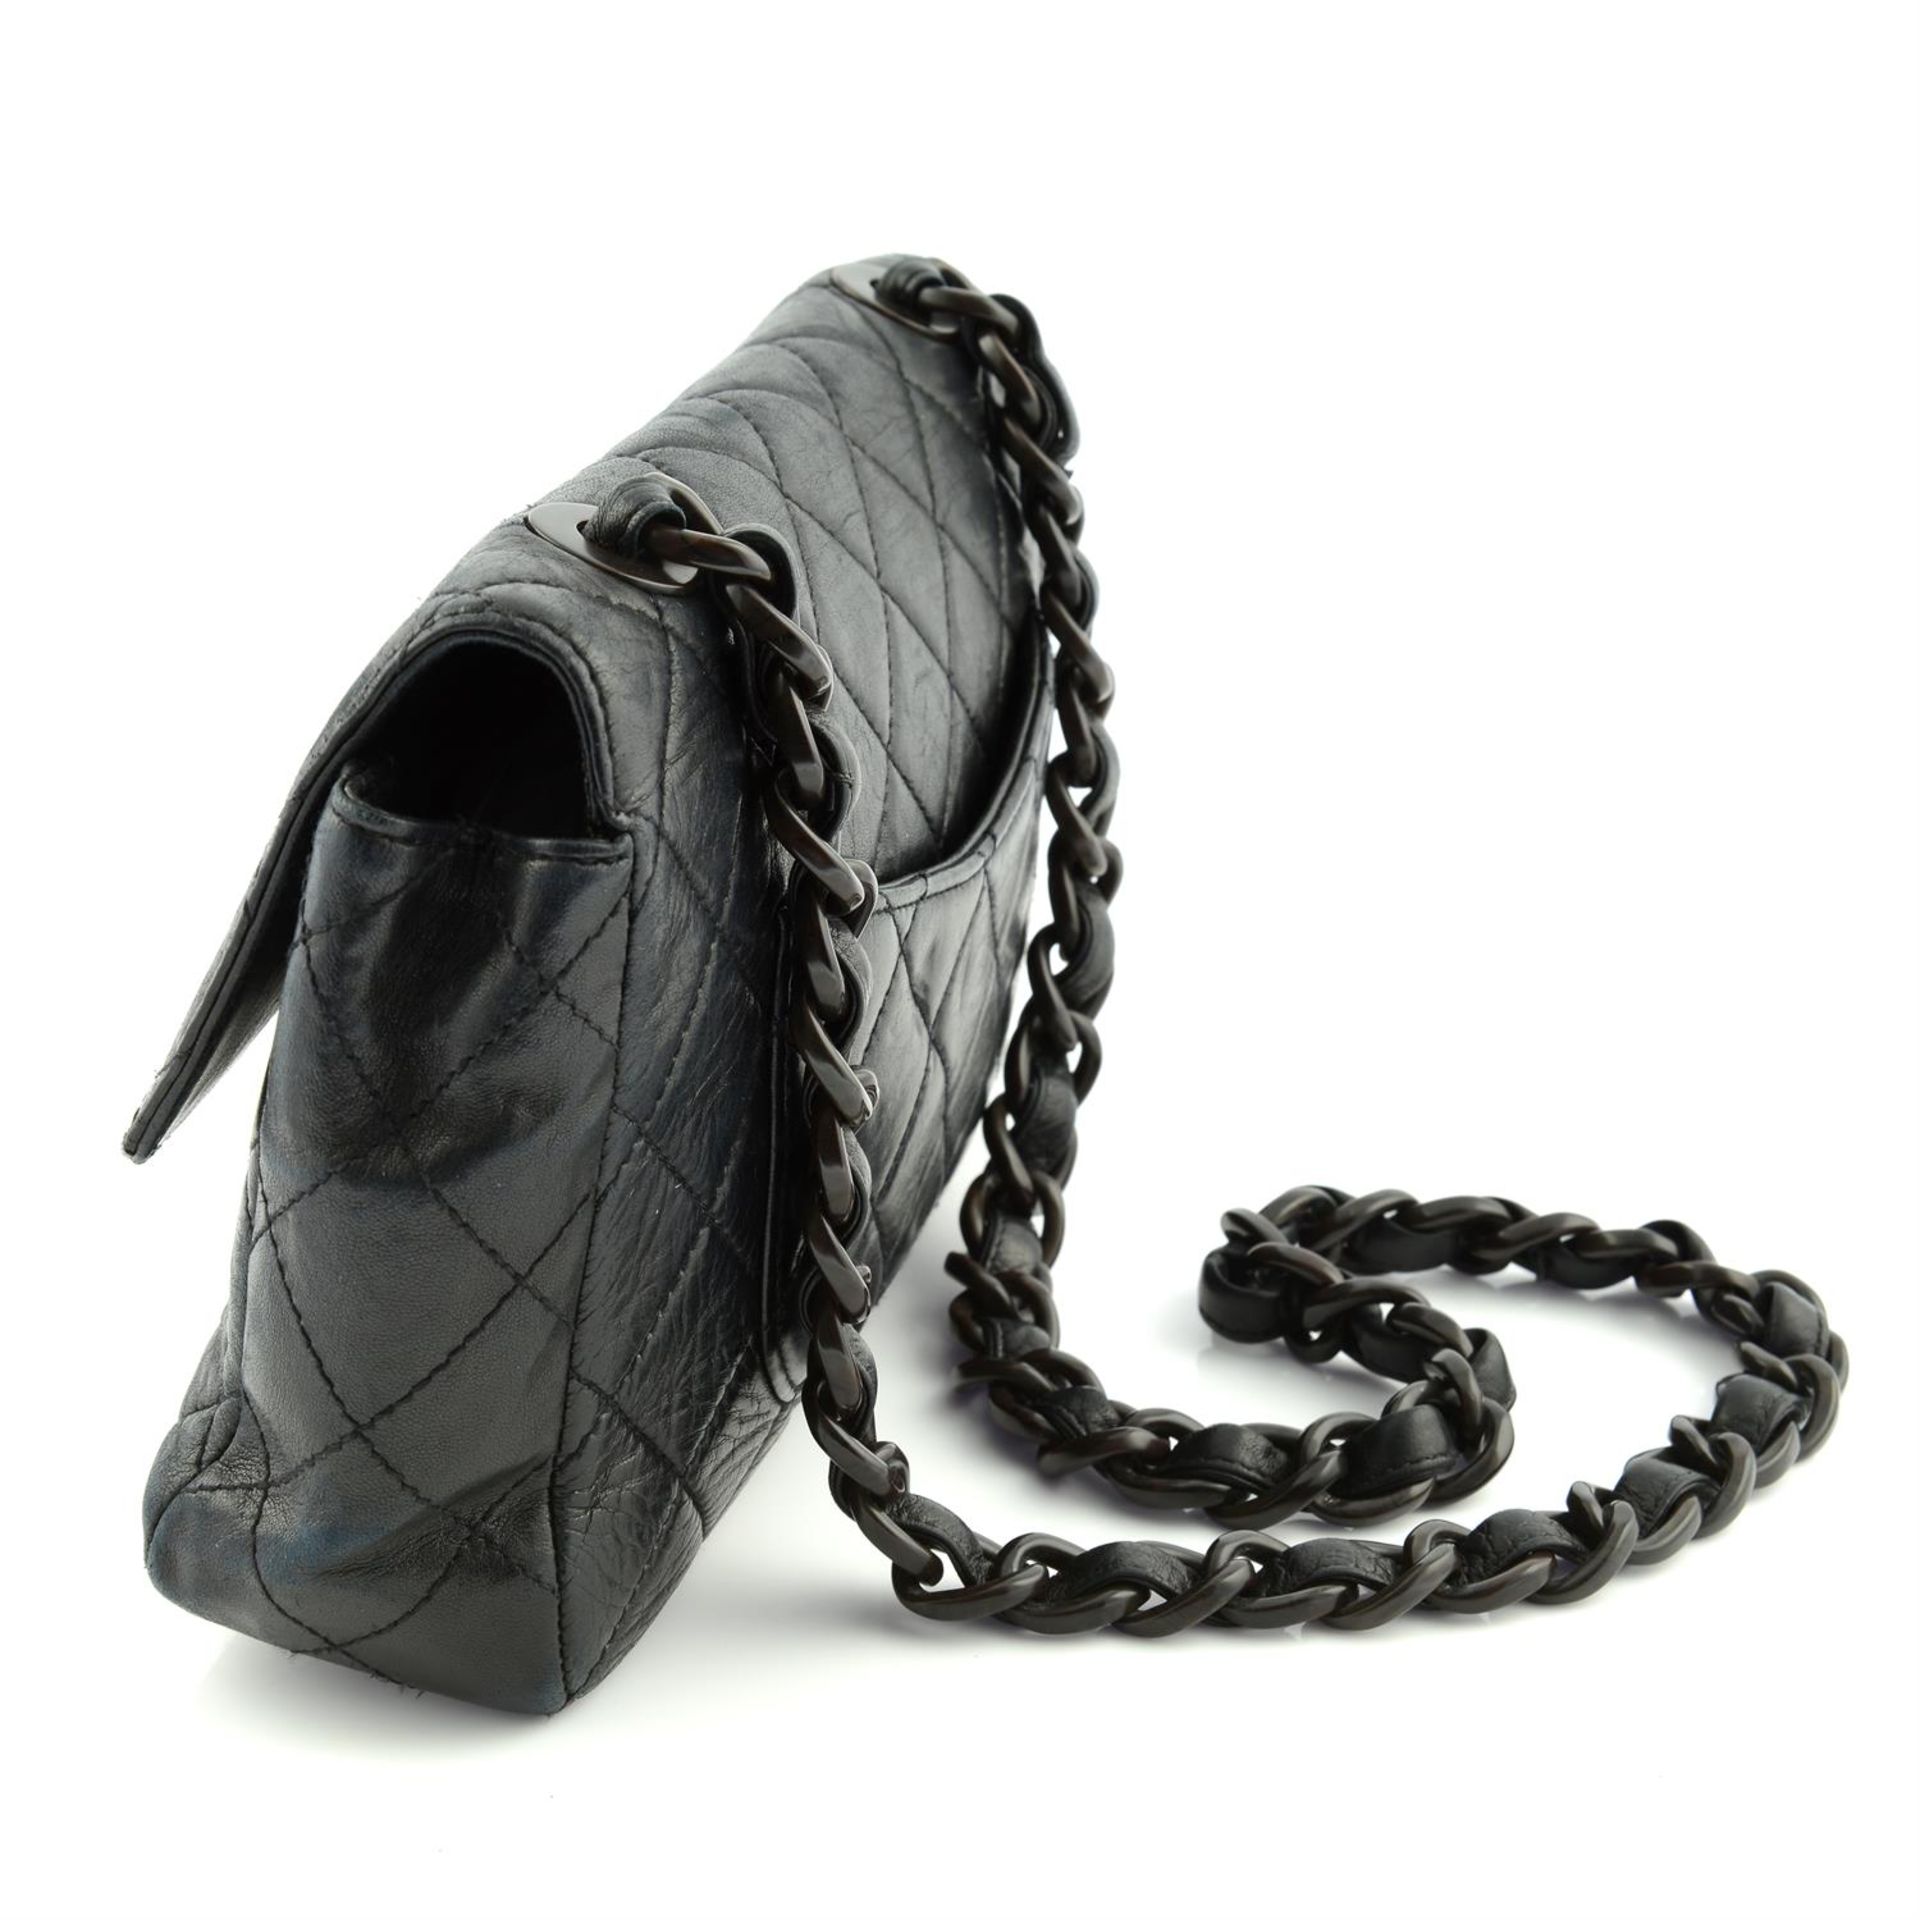 CHANEL - a leather single flap handbag. - Image 3 of 4